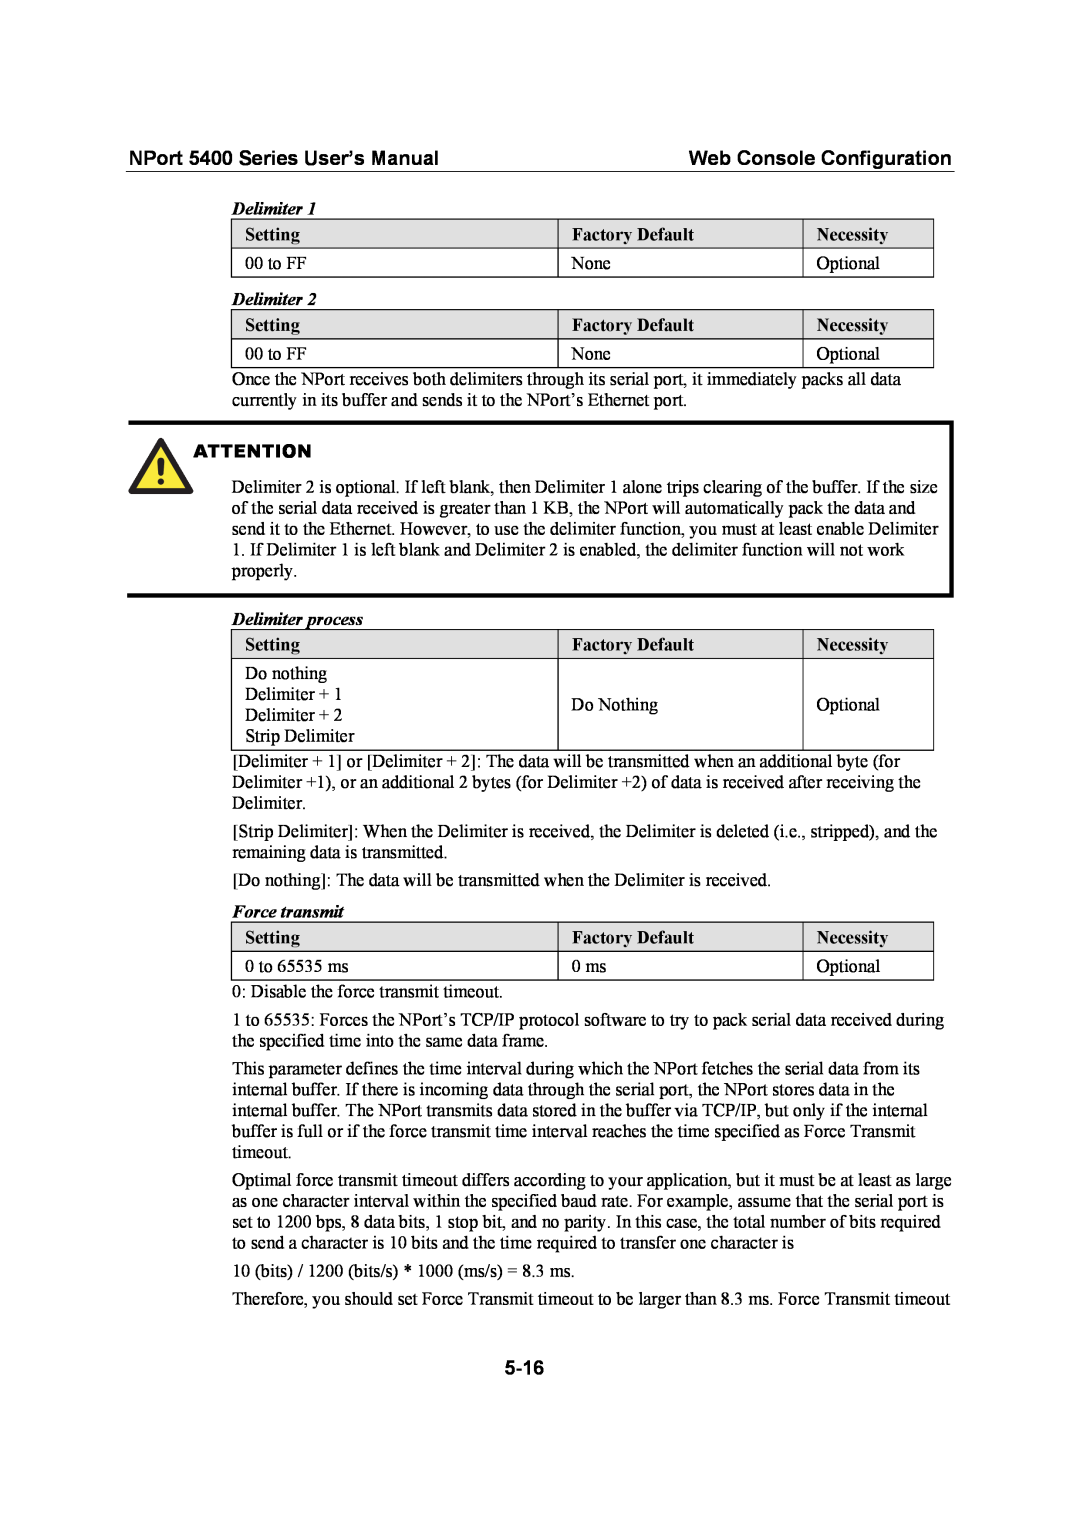 Moxa Technologies user manual NPort 5400 Series User’s Manual, Web Console Configuration, 5-16 